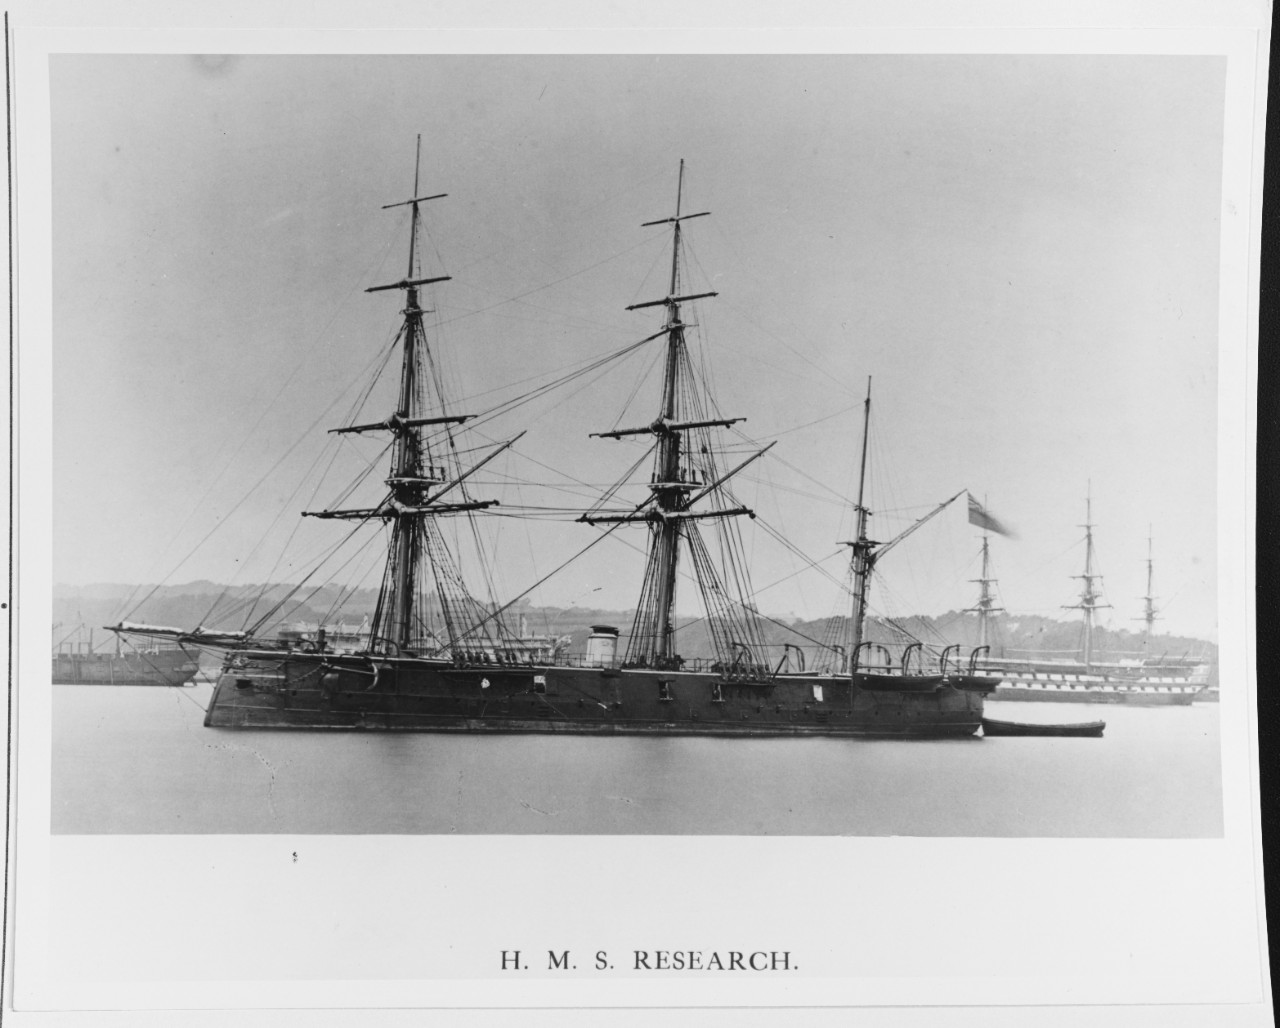 HMS RESEARCH (BRITISH IRONCLAD SLOOP, 1863)